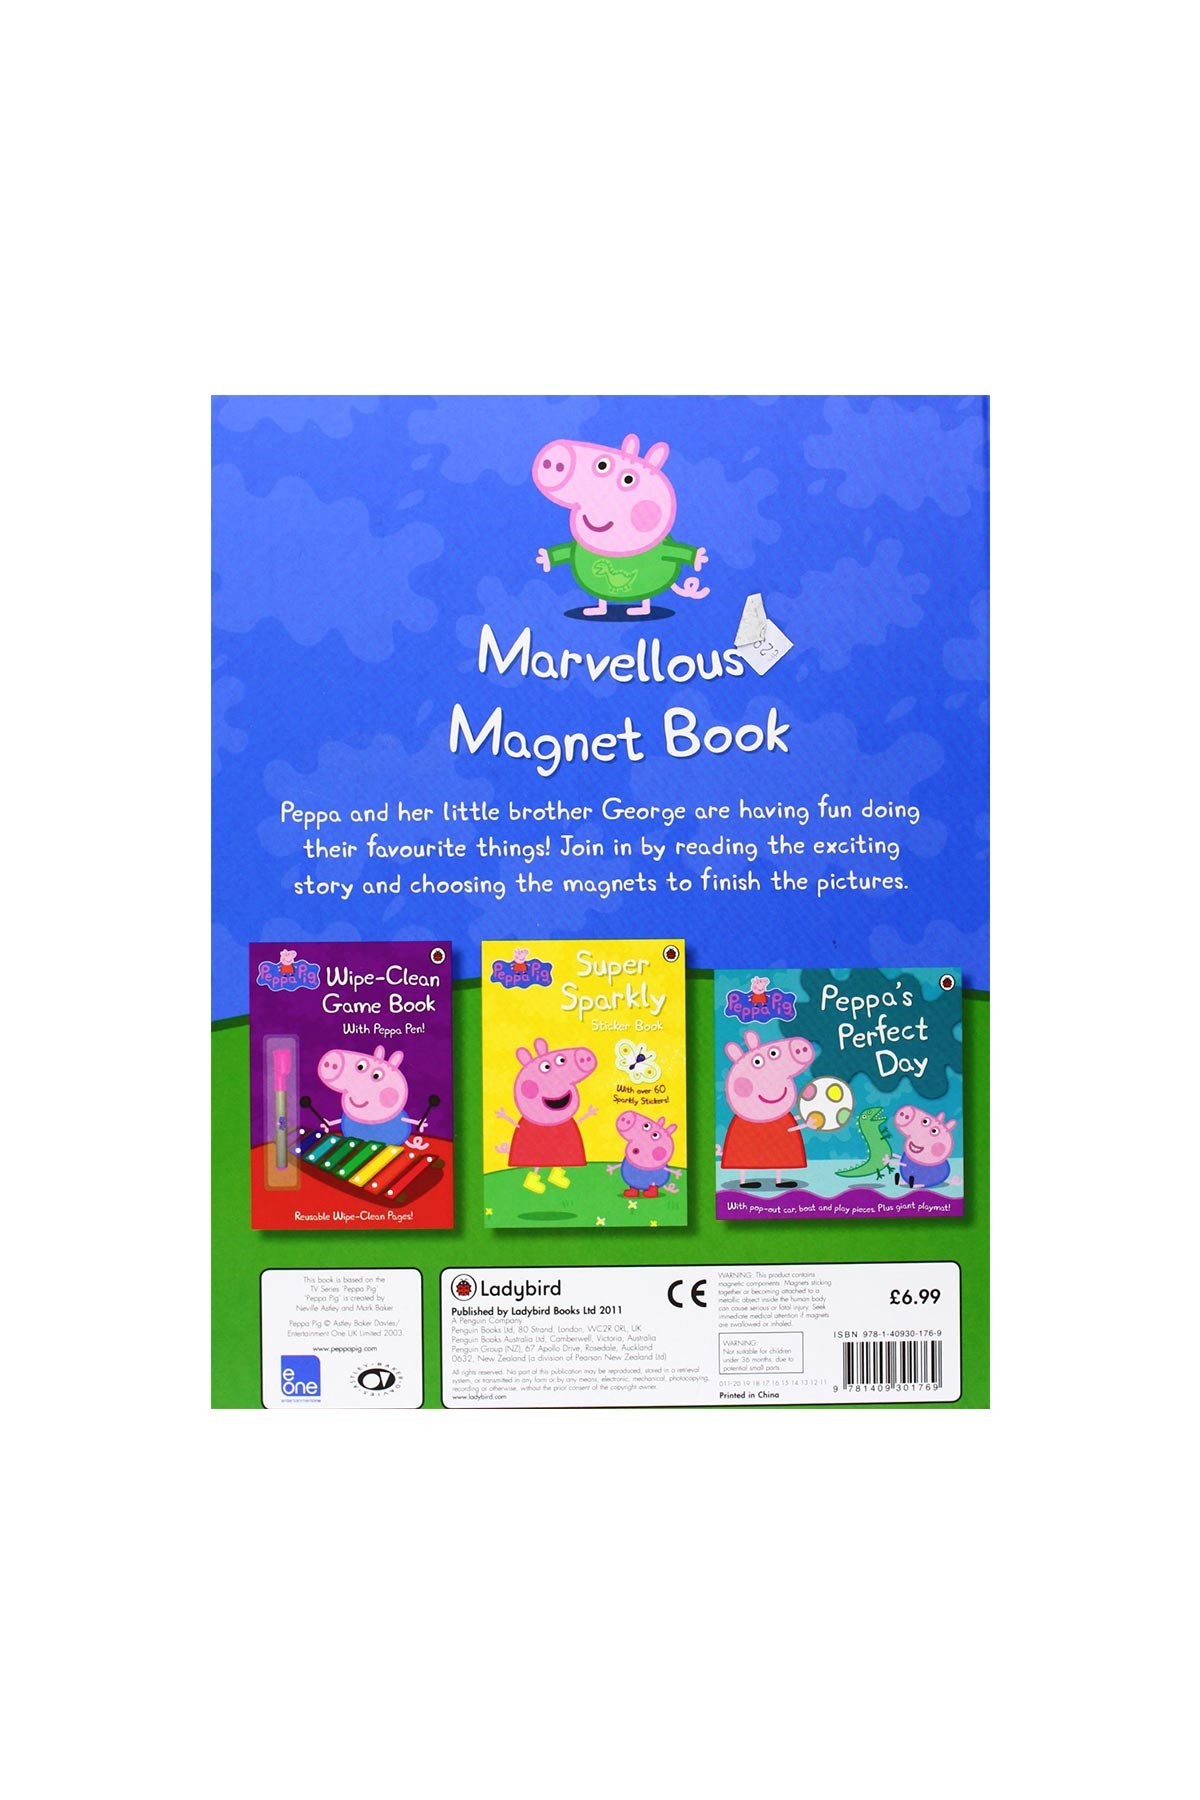 Peppa Pig: Marvellous Magnet Book